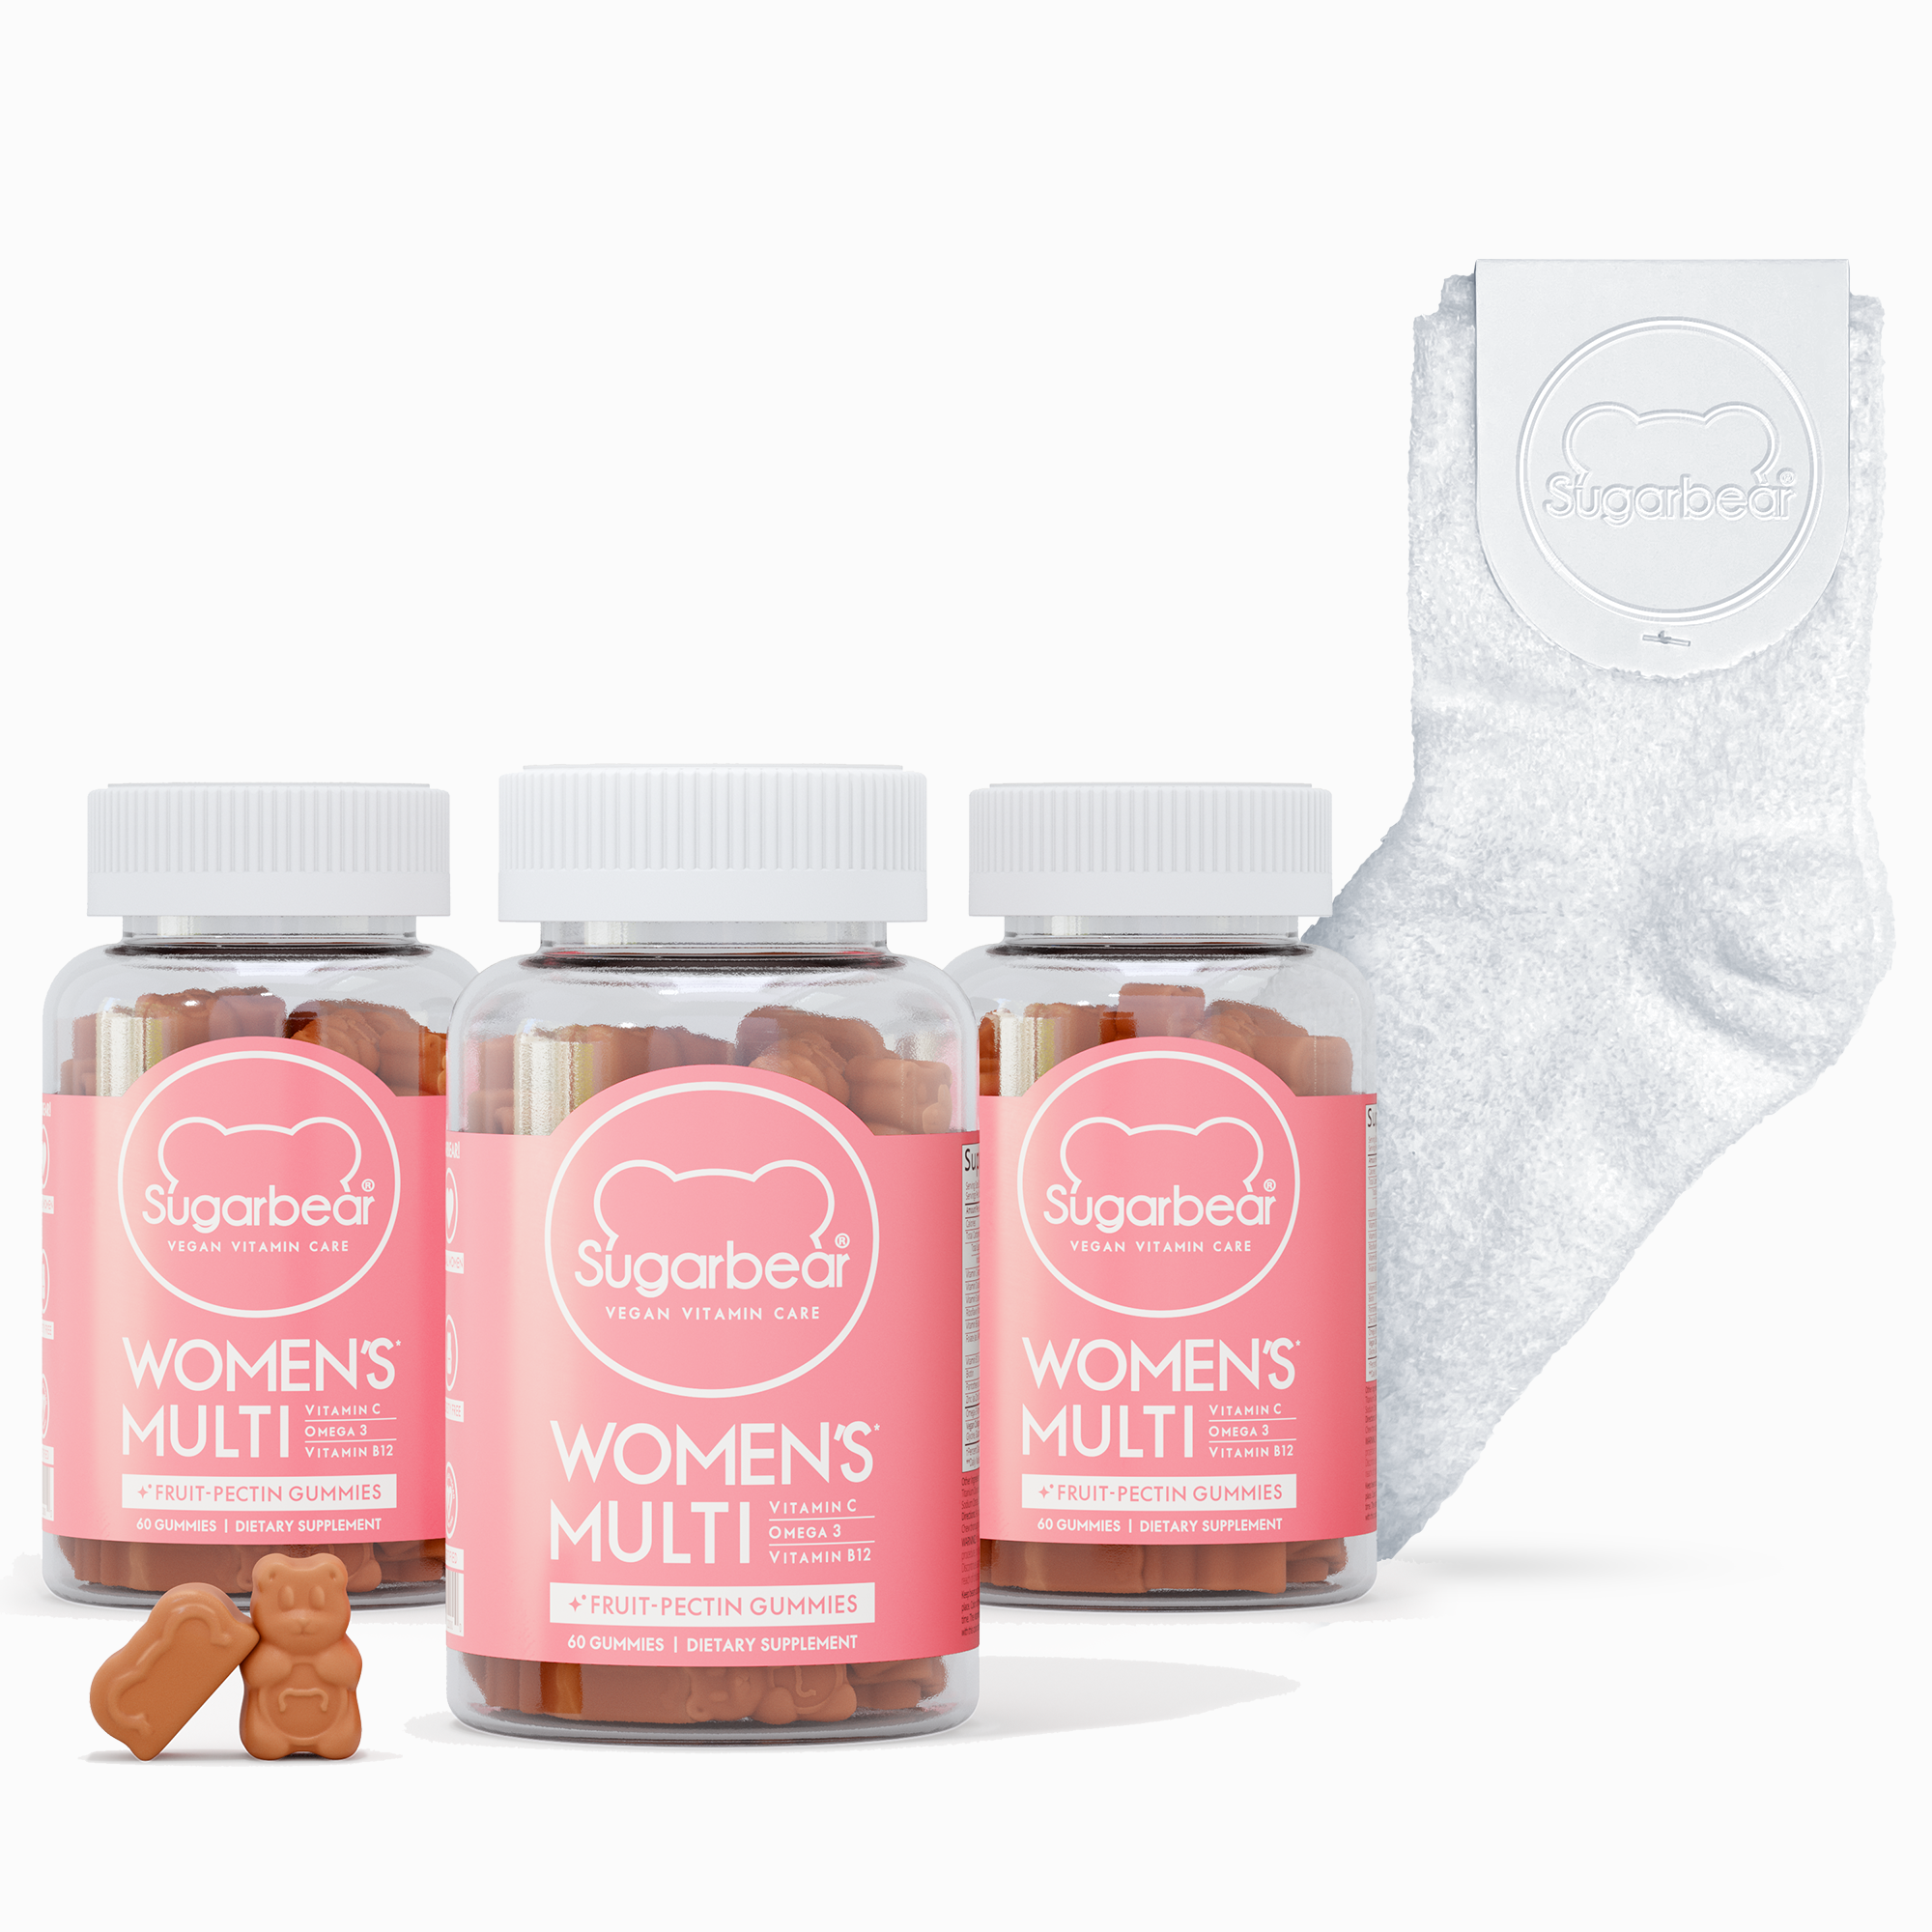 Sugarbear Women's Multi Vitamins - 3 Month Pack + Free Gift